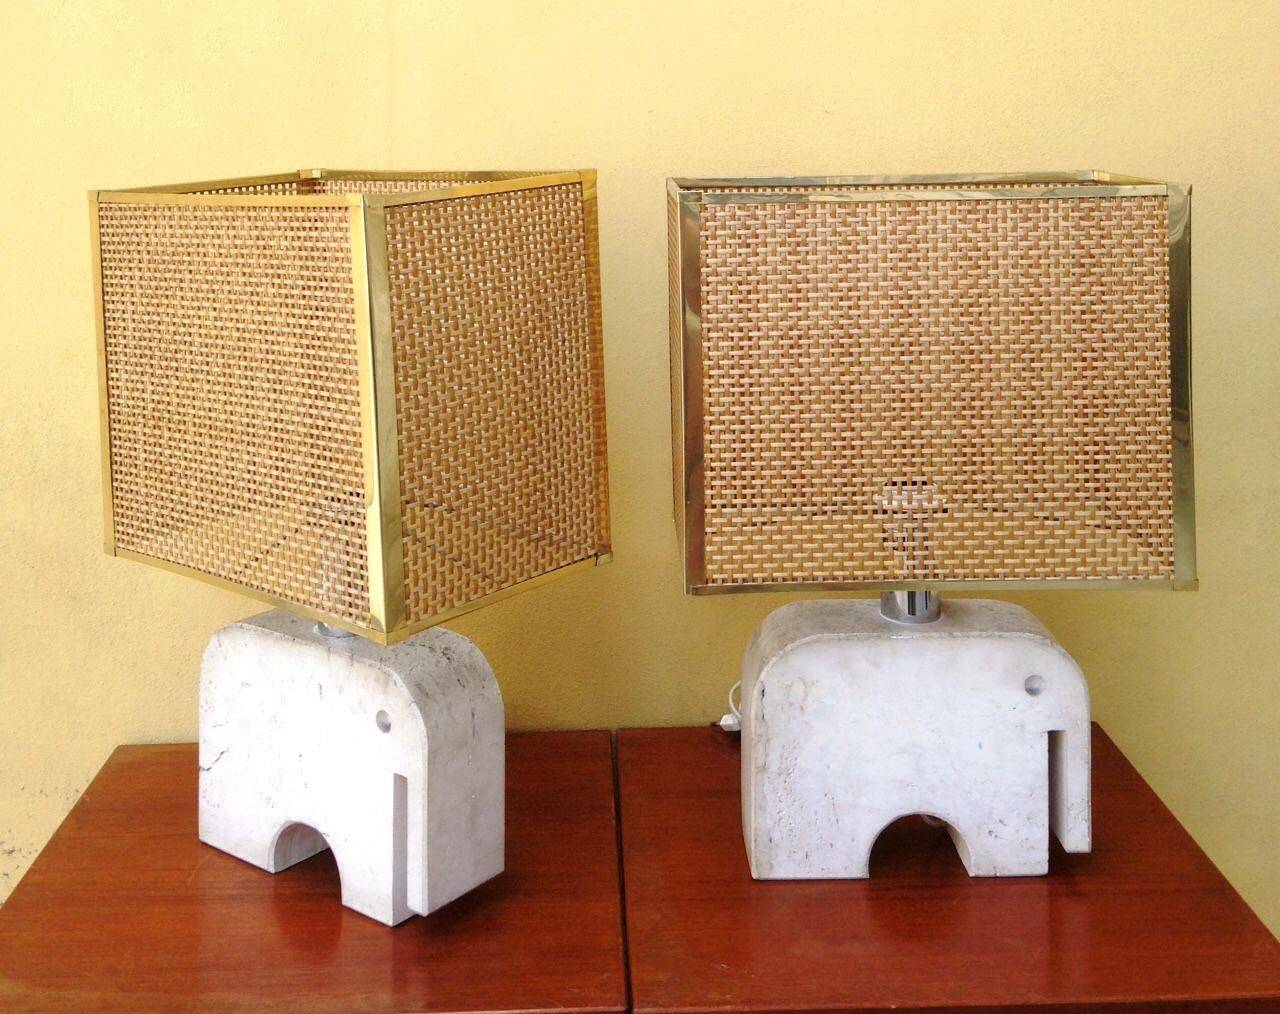 Pair of sculptural travertine lamps, original shades.